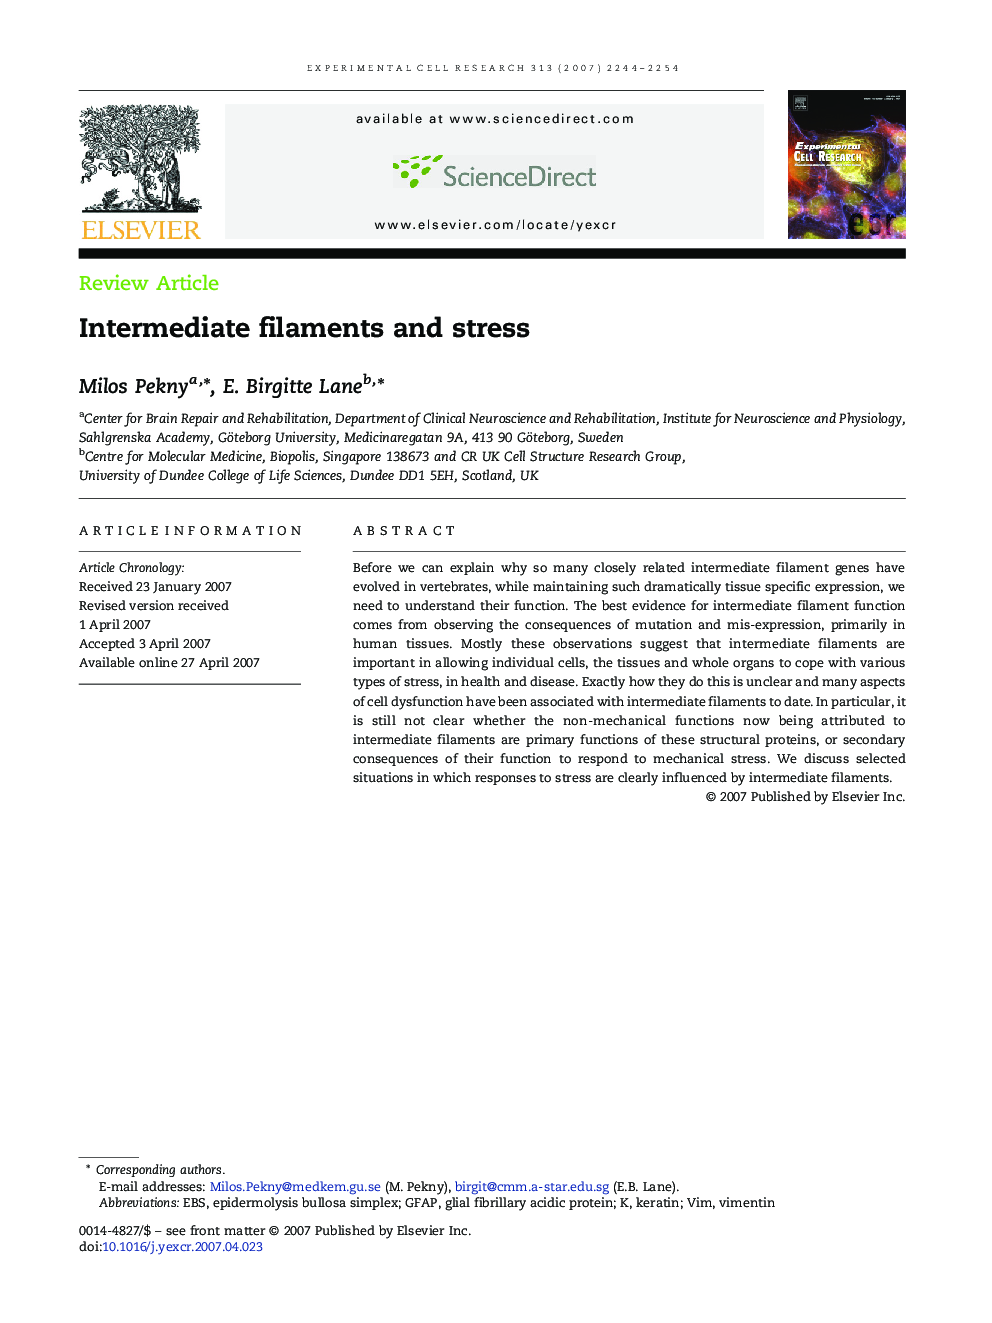 Intermediate filaments and stress